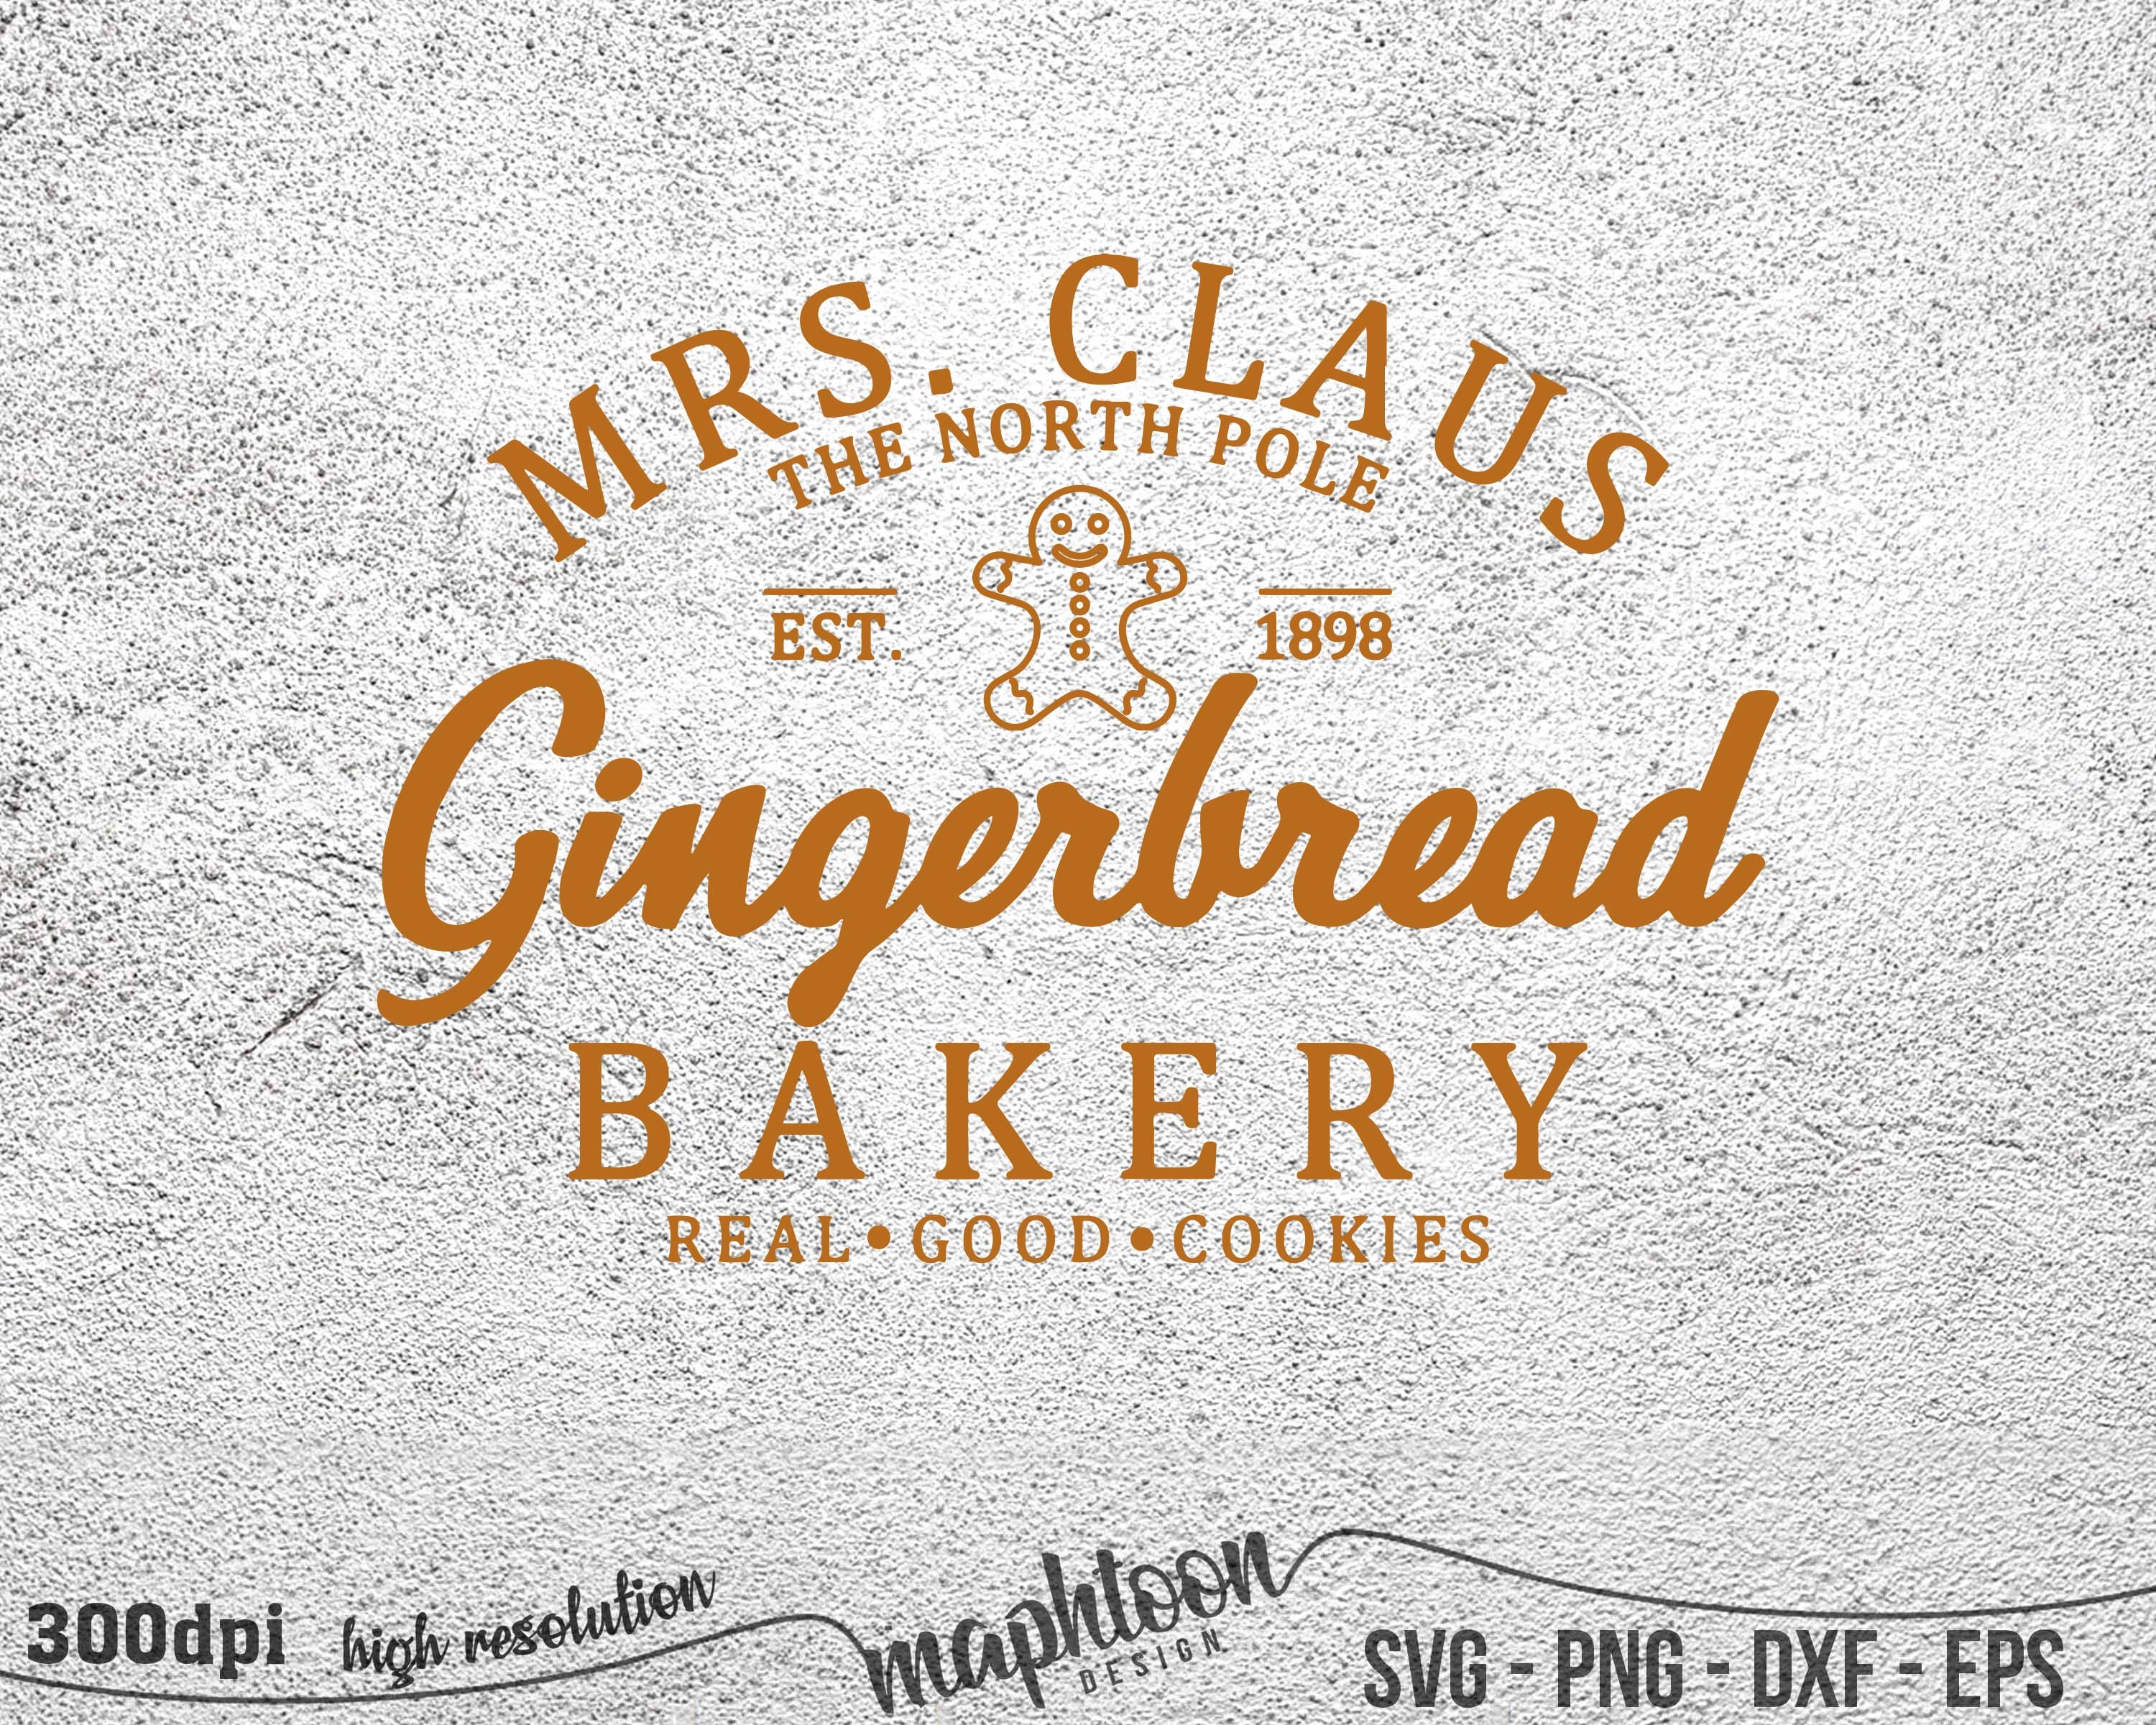 Mrs. Claus' Bakery Gingerbread Plastic Milk Bottle, 13oz